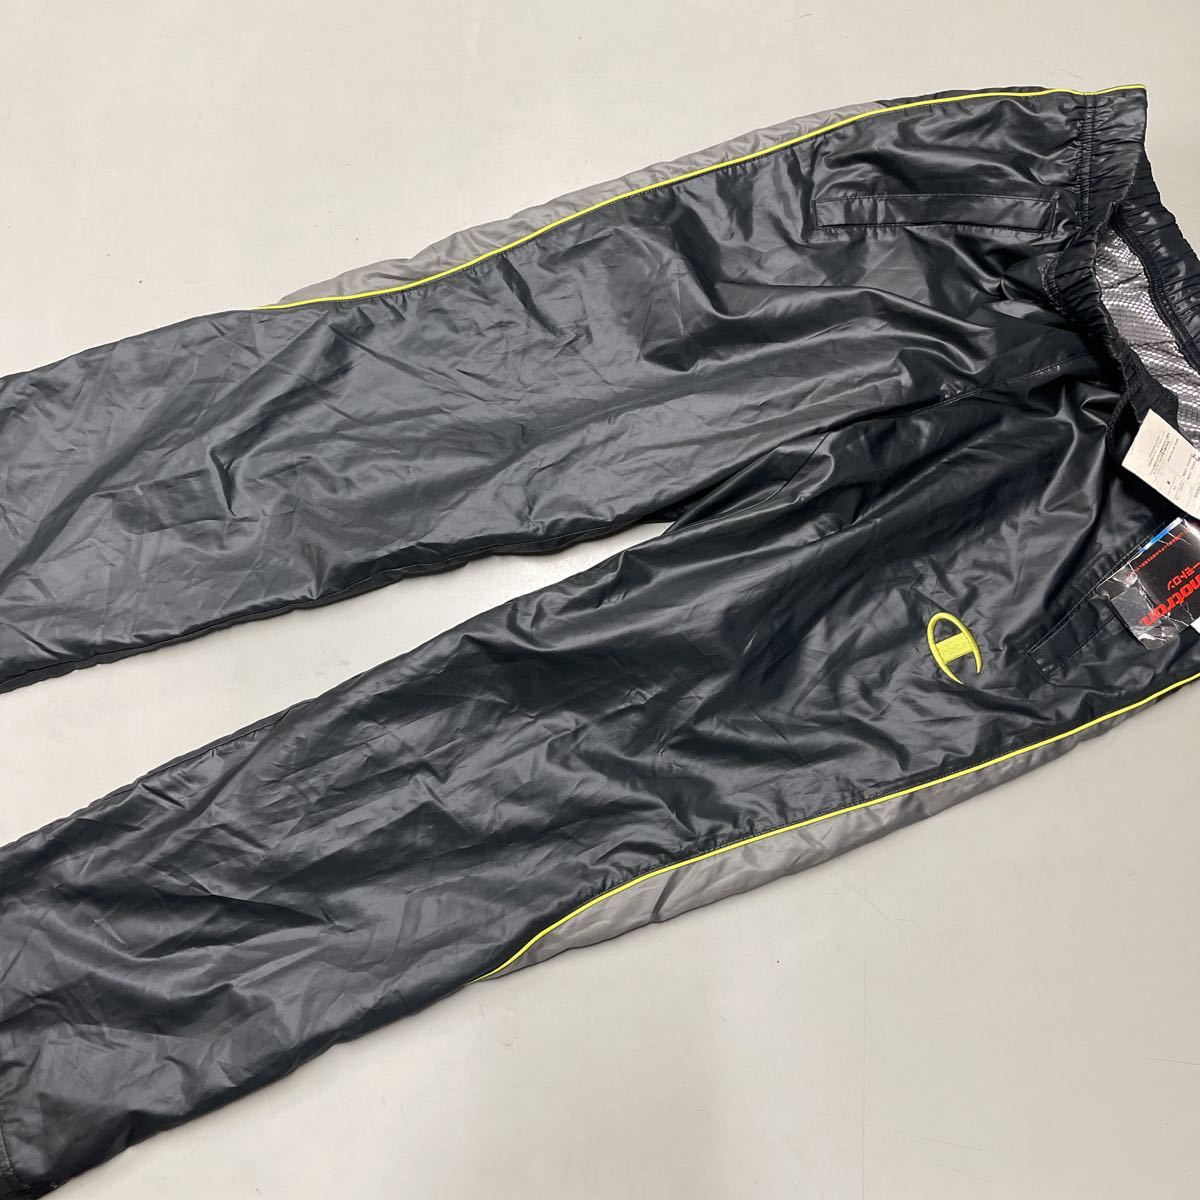  Champion champion ветровка брюки CJ1593 черный lime низ не использовался Thermo to long водоотталкивающий теплоизоляция M размер мужской 